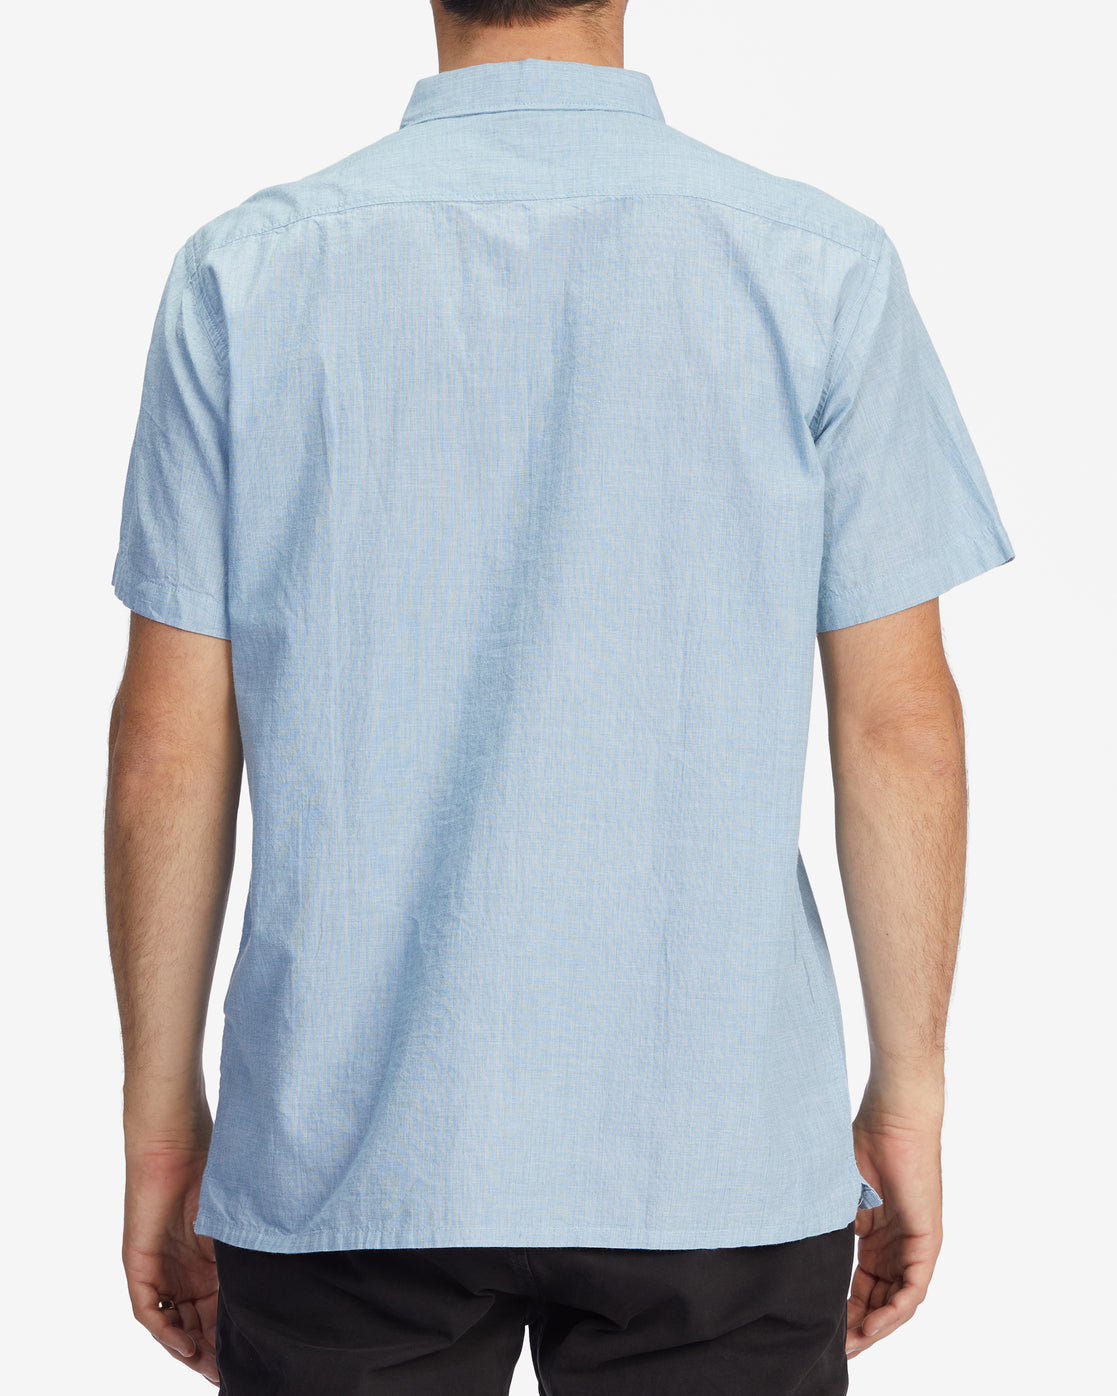 All Day Organic Short Sleeve Shirt - ABYWT00173